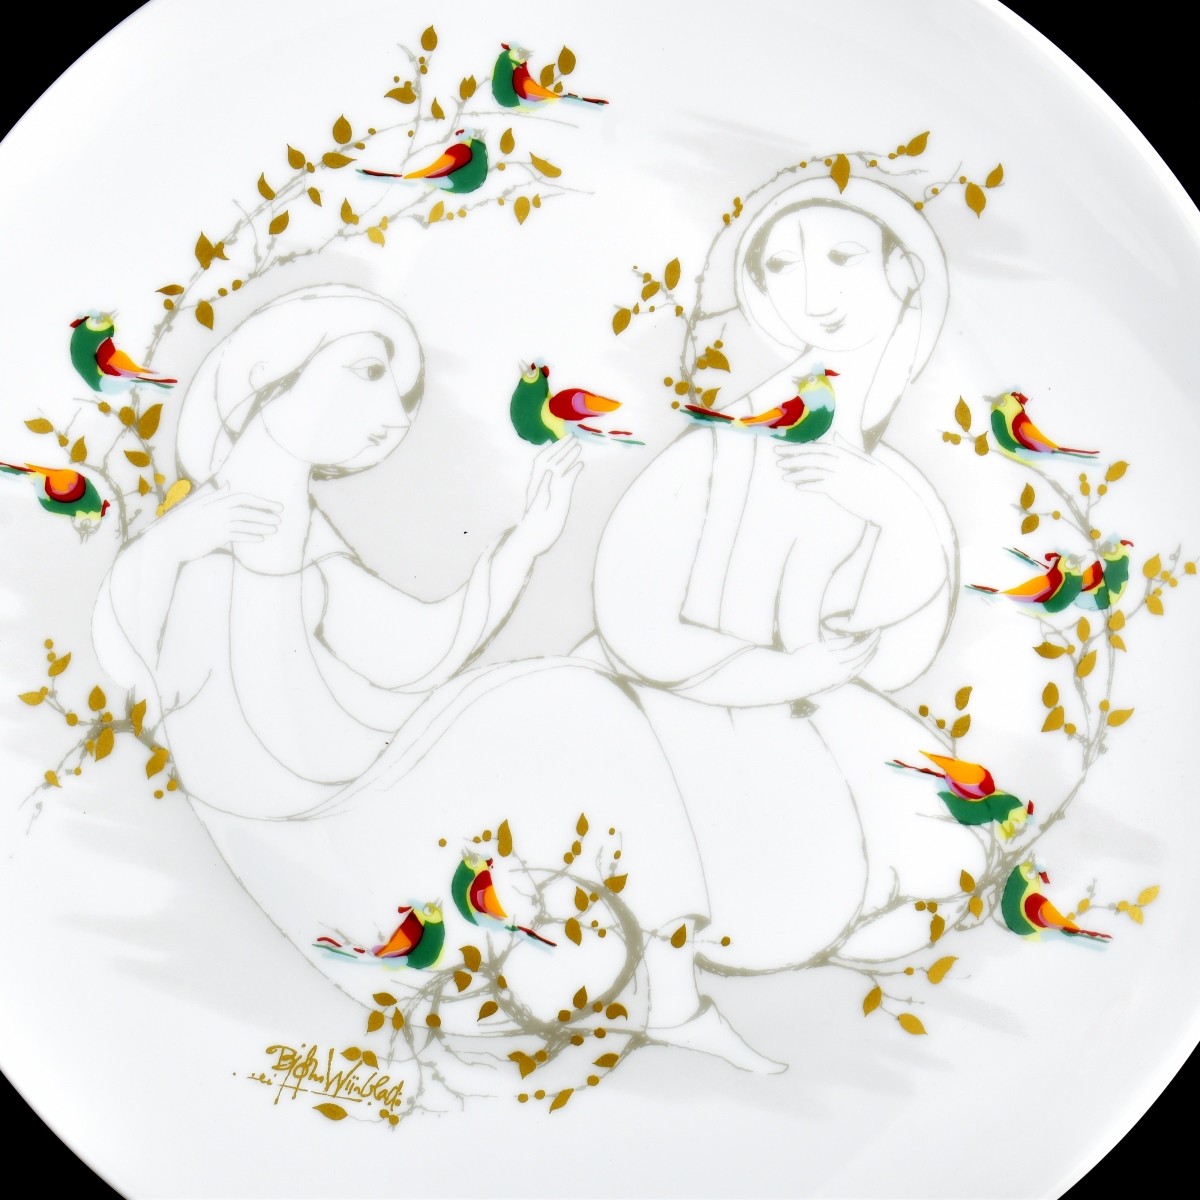 Two Rosenthal Porcelain Tableware